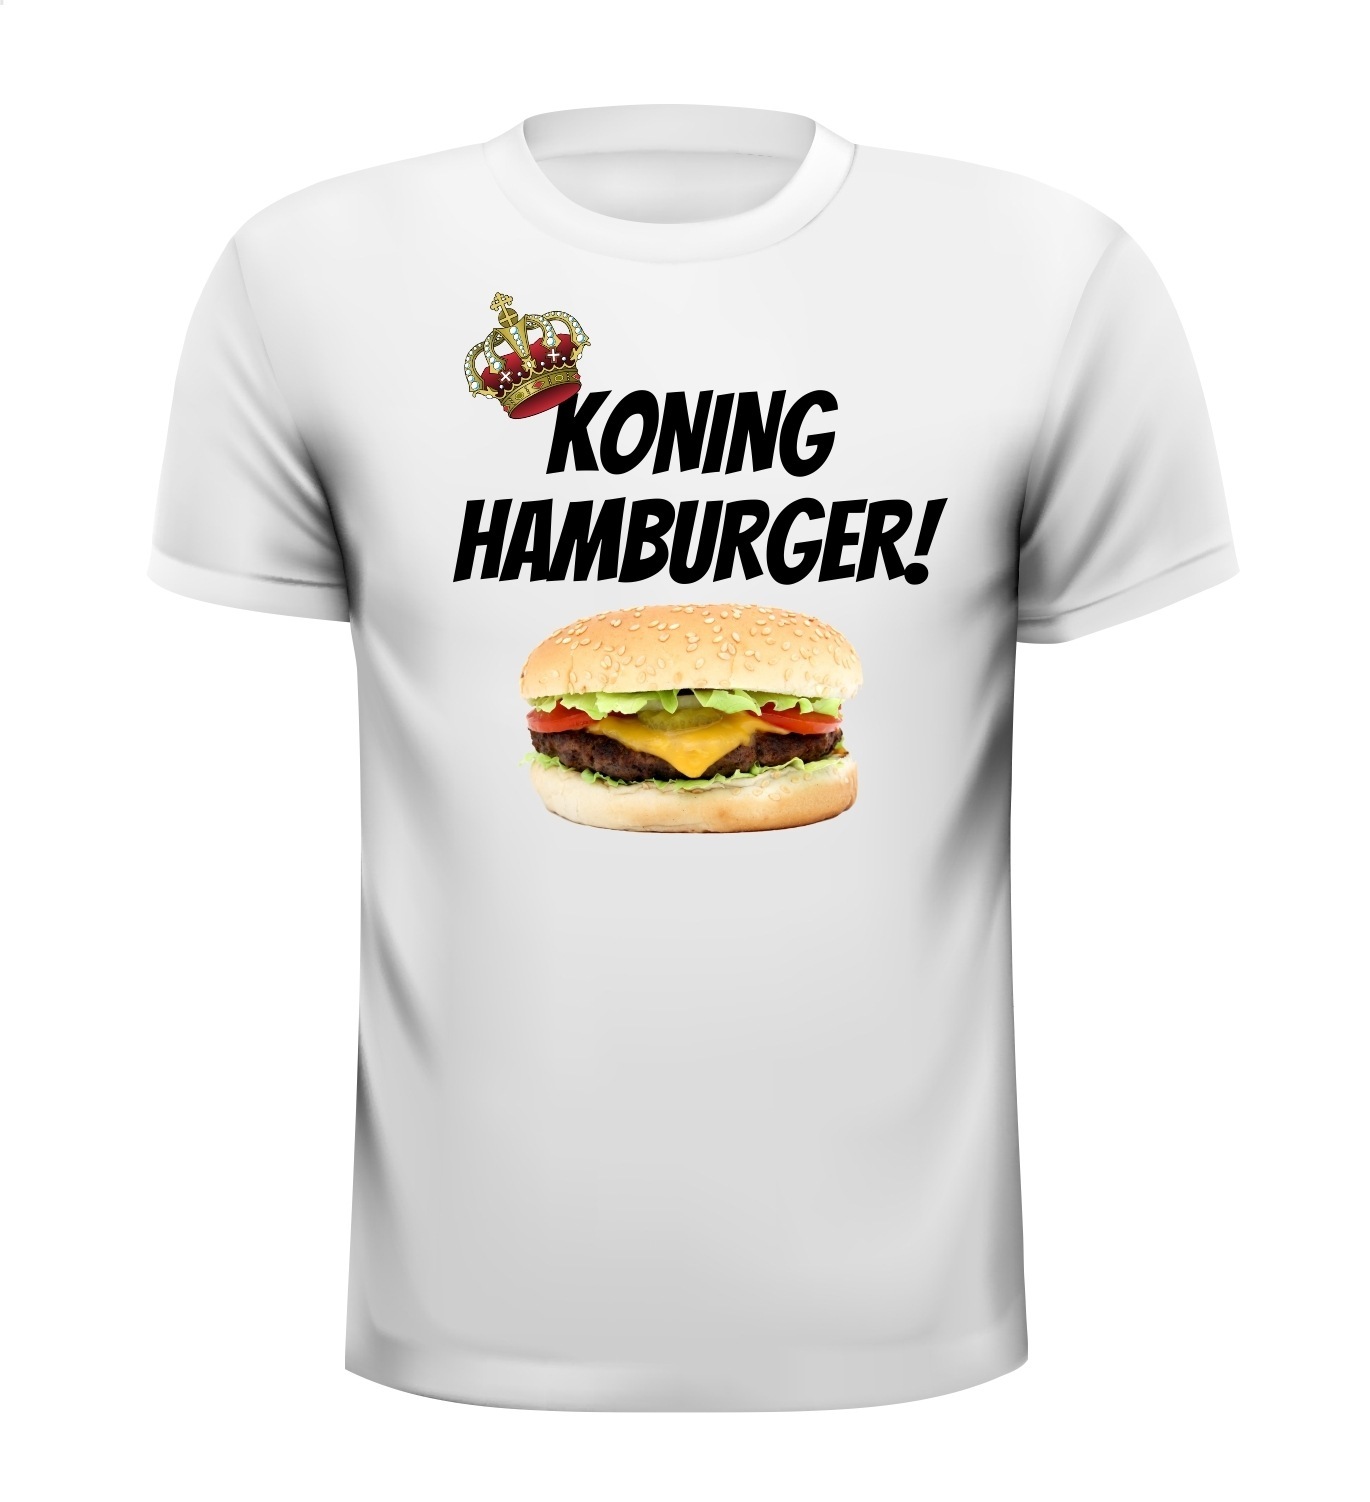 Koning hamburger T-shirt